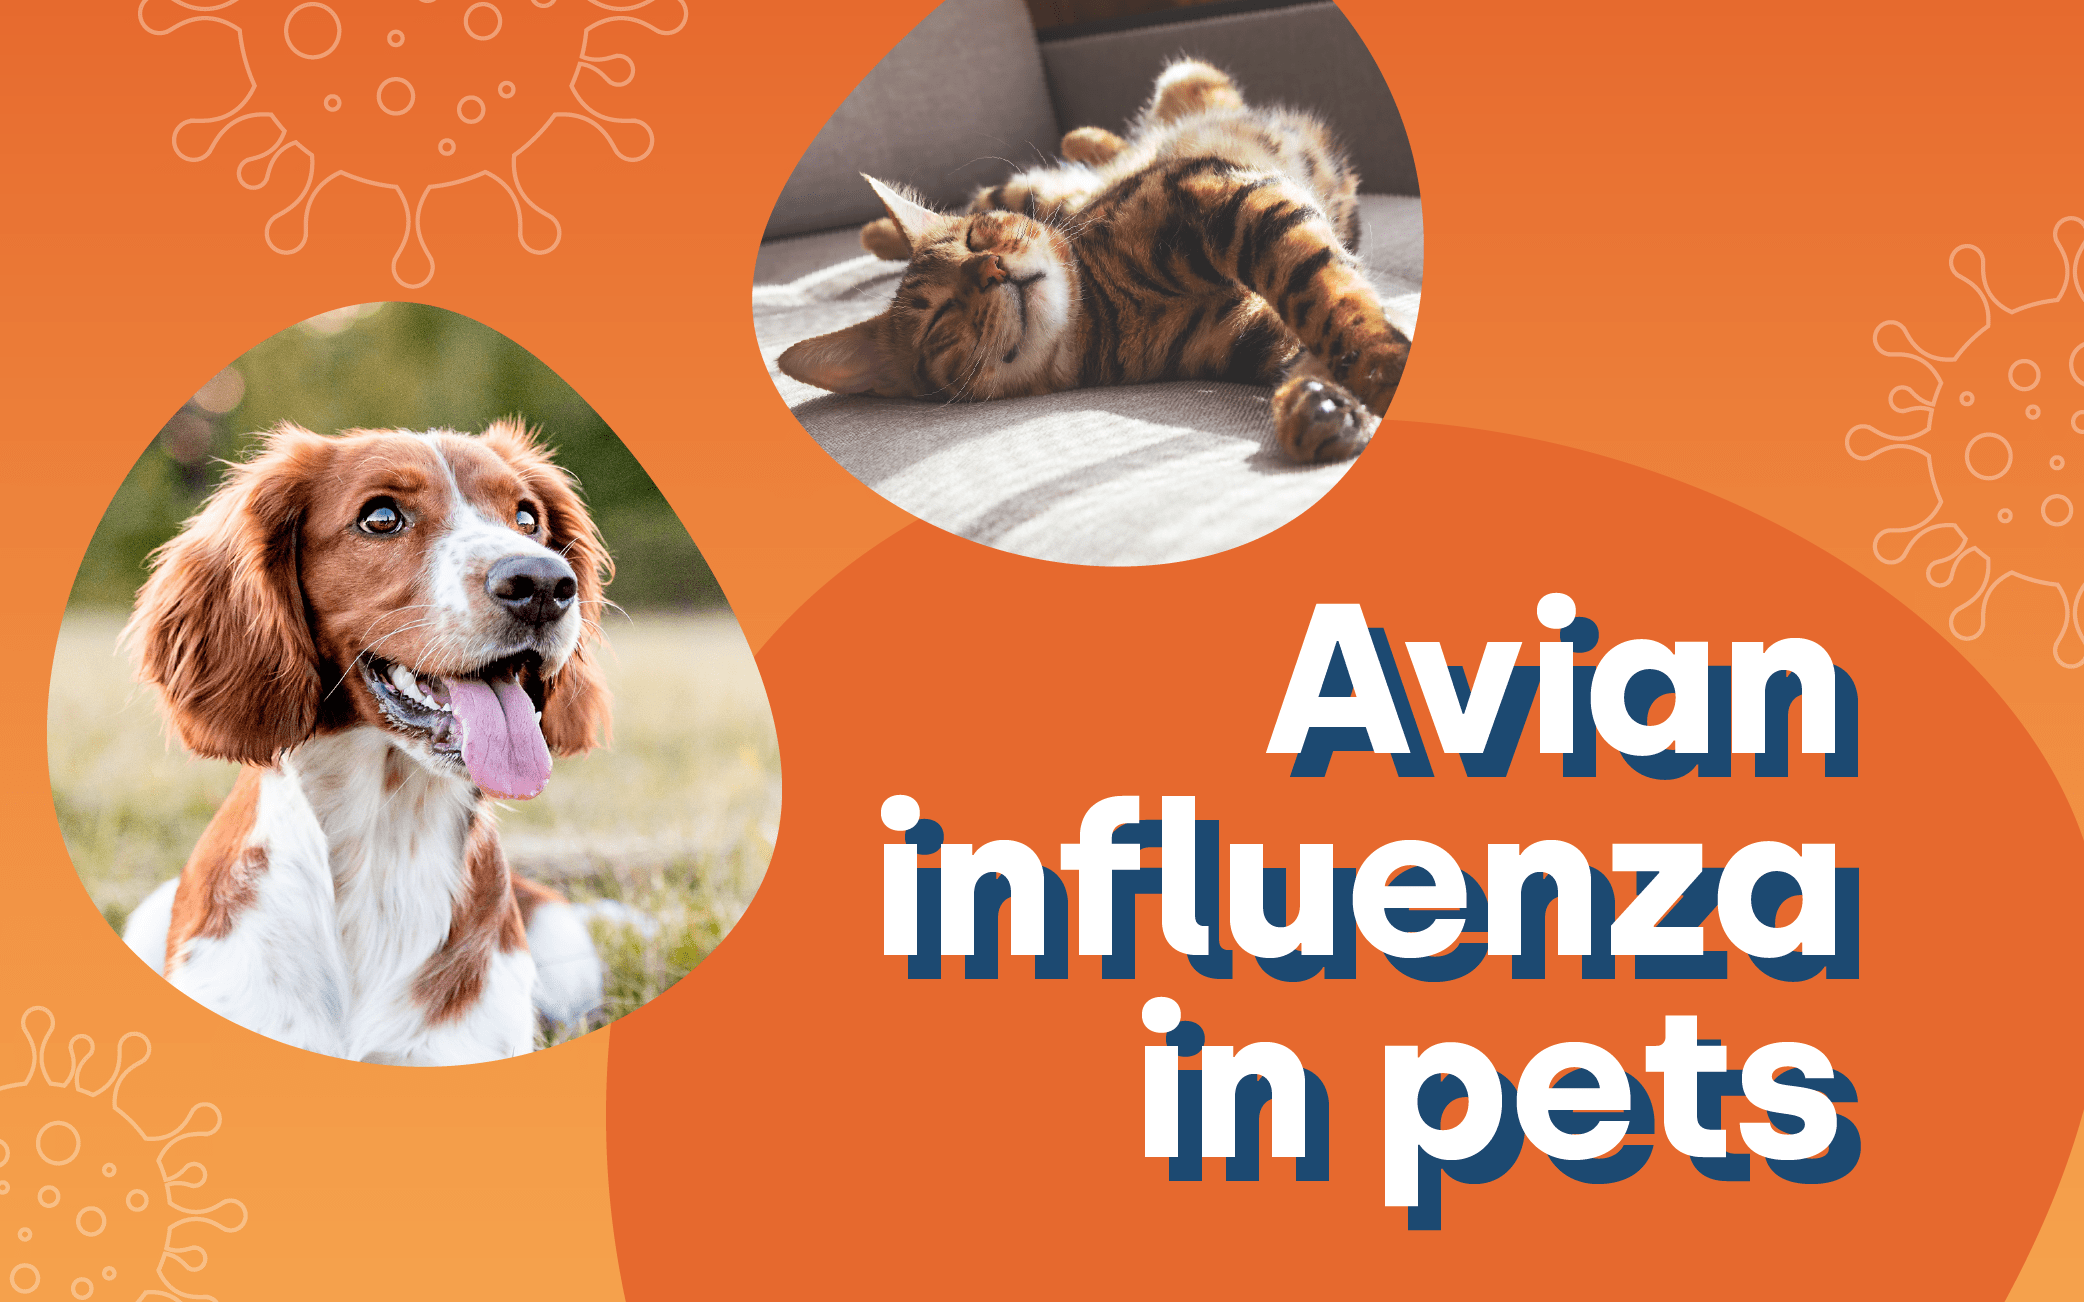 Avian influenza in pets